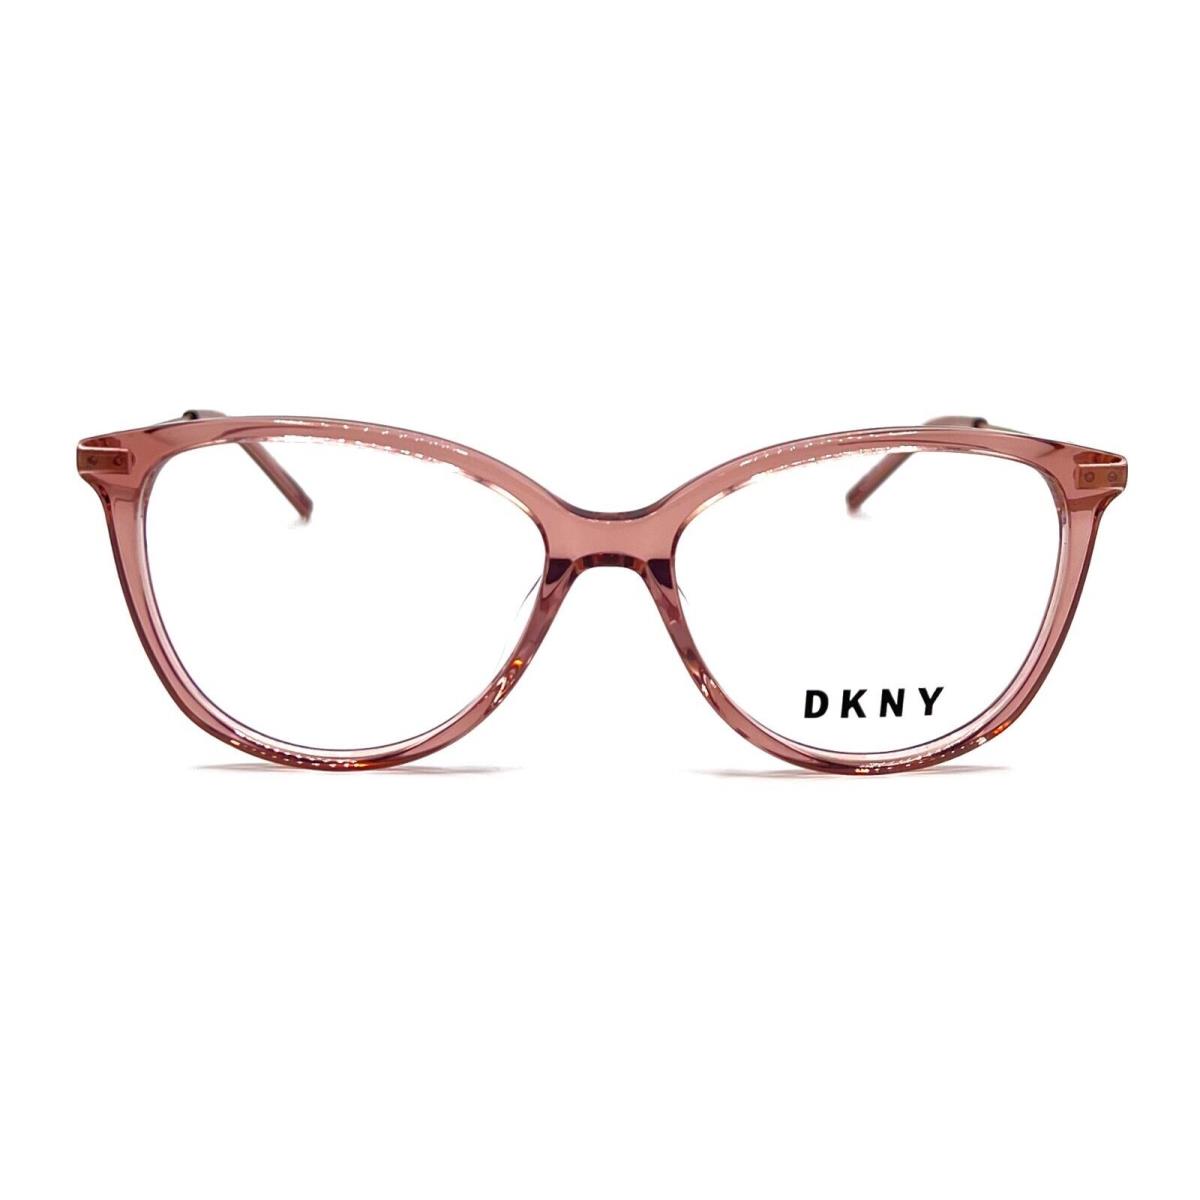 Dkny - DK7005 265 52/15/135 - Blush Crystal - Women Eyeglasses